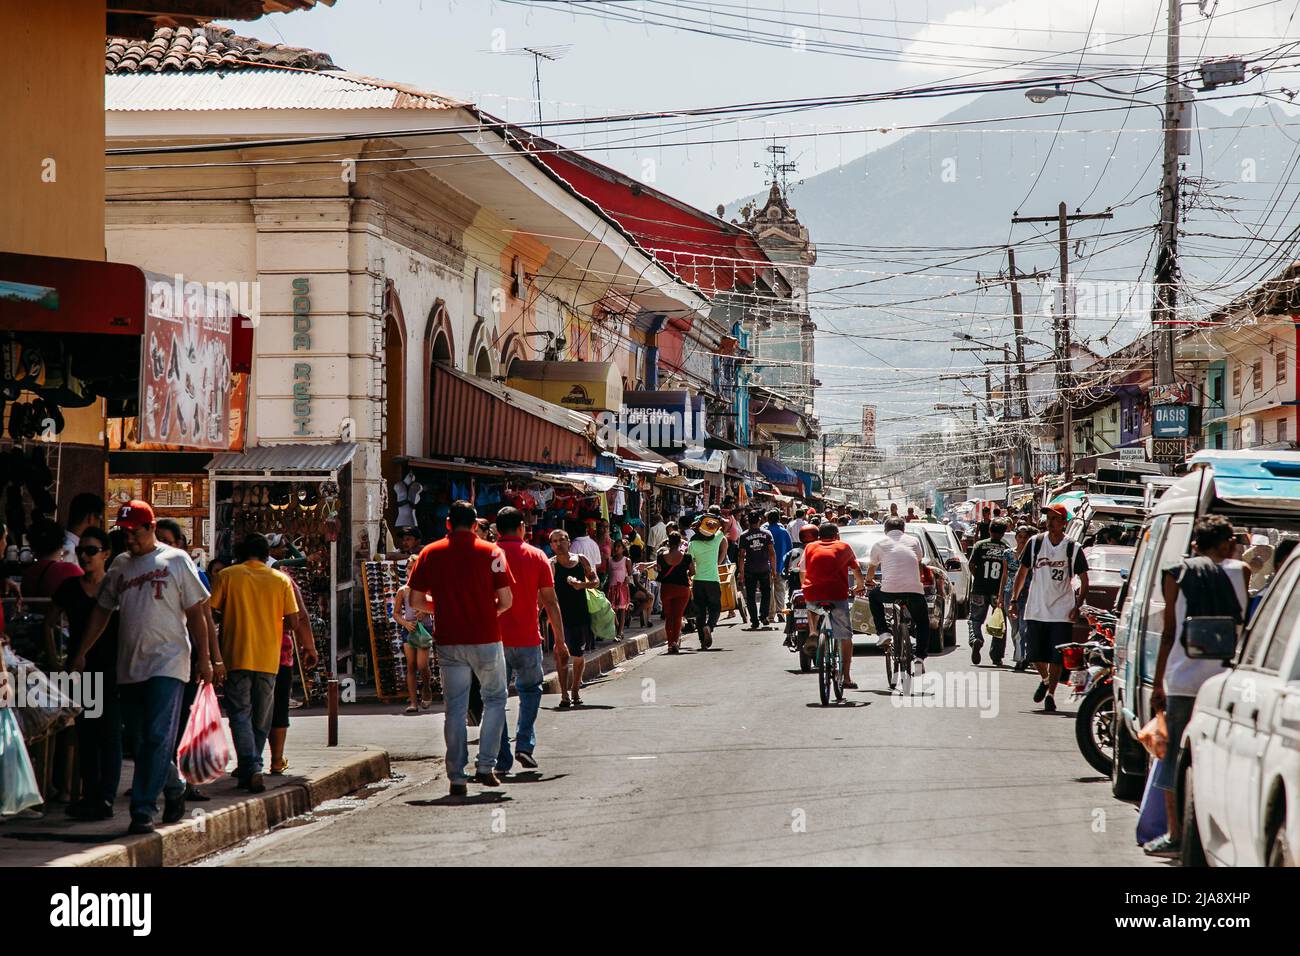 busy street scene - local people, central market - Granada, Nicaragua Stock Photo